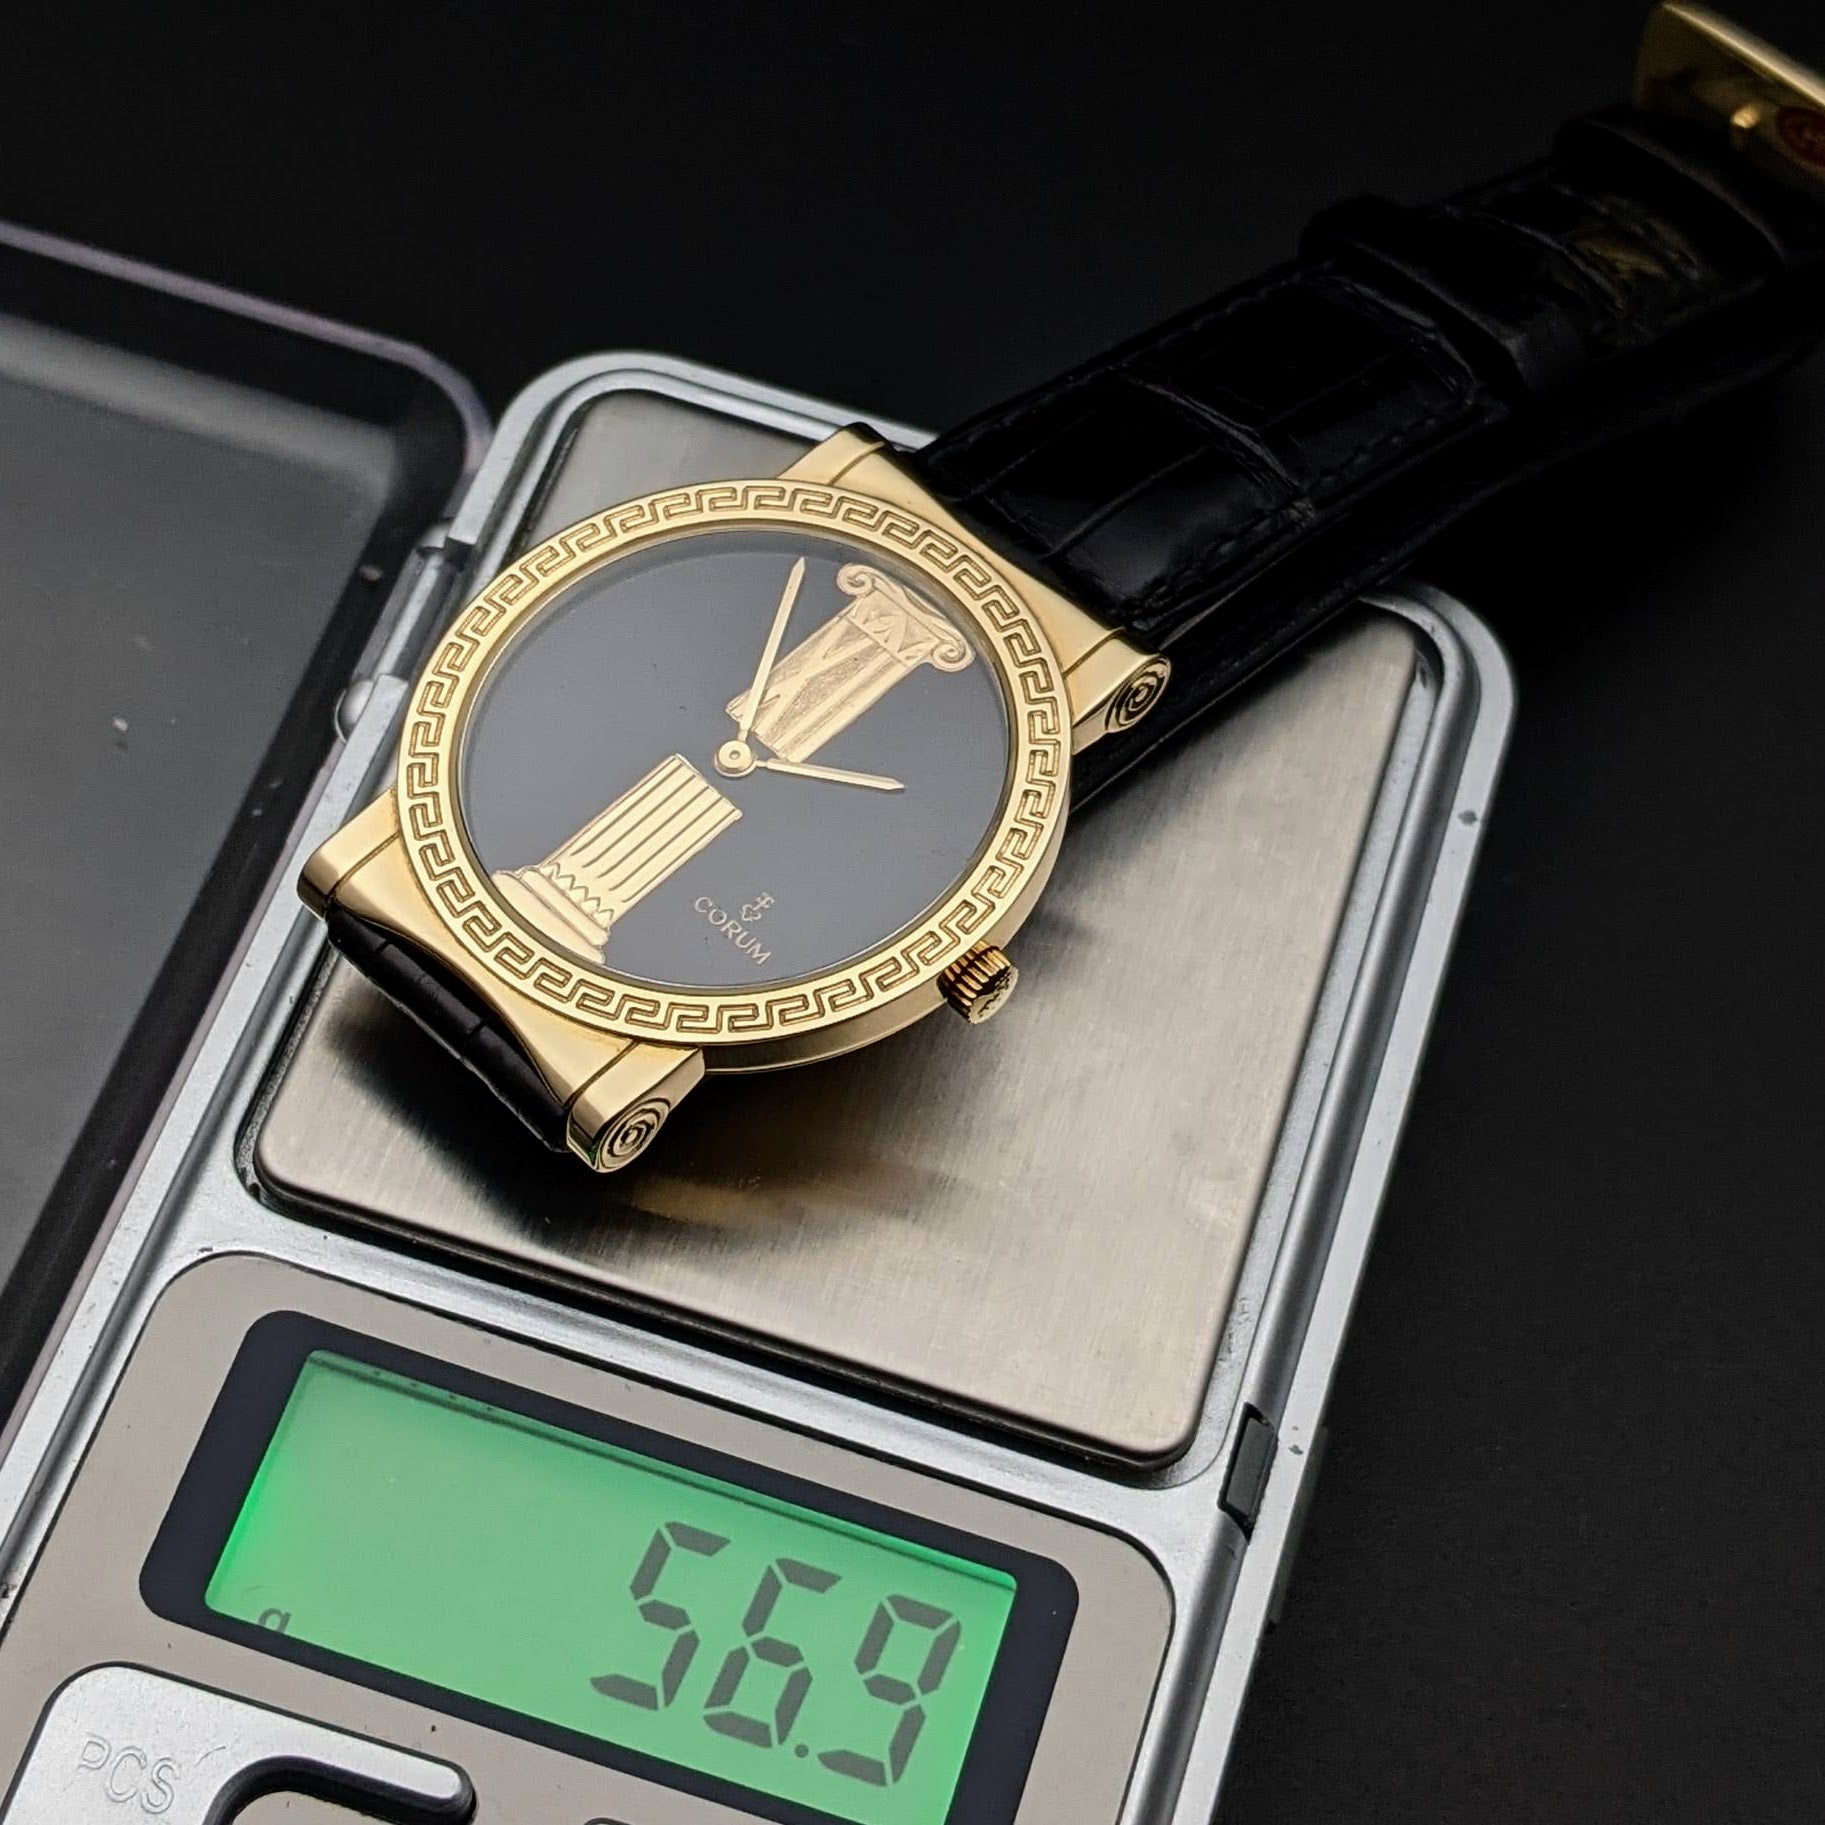 Wrist watch Corum 18k gold Limited Edition  55.610.56